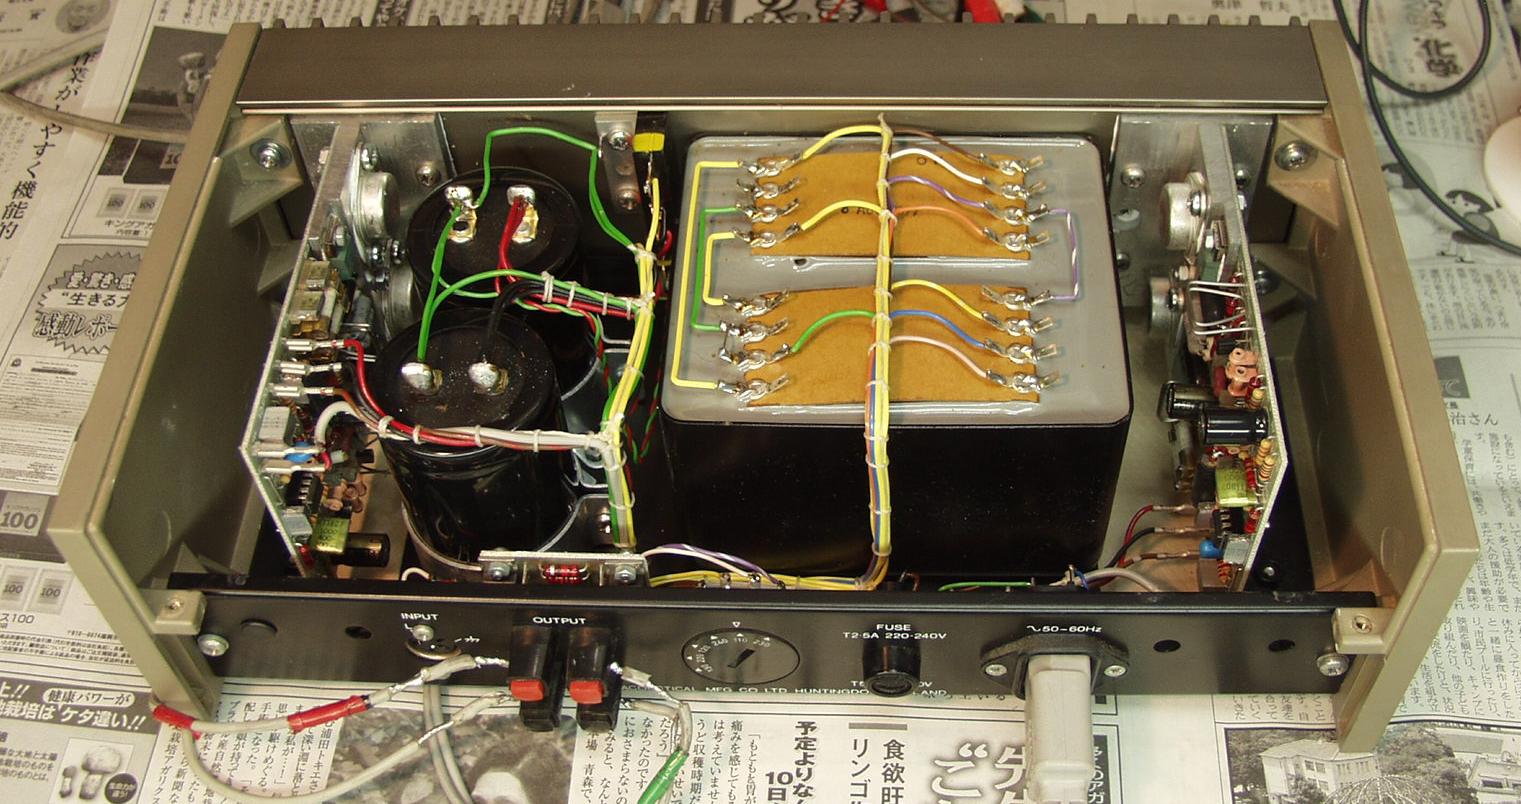 1pc 140W Audio Power Amplifier PCB based on QUAD 606 Amp DIY or Repair 120x188m 